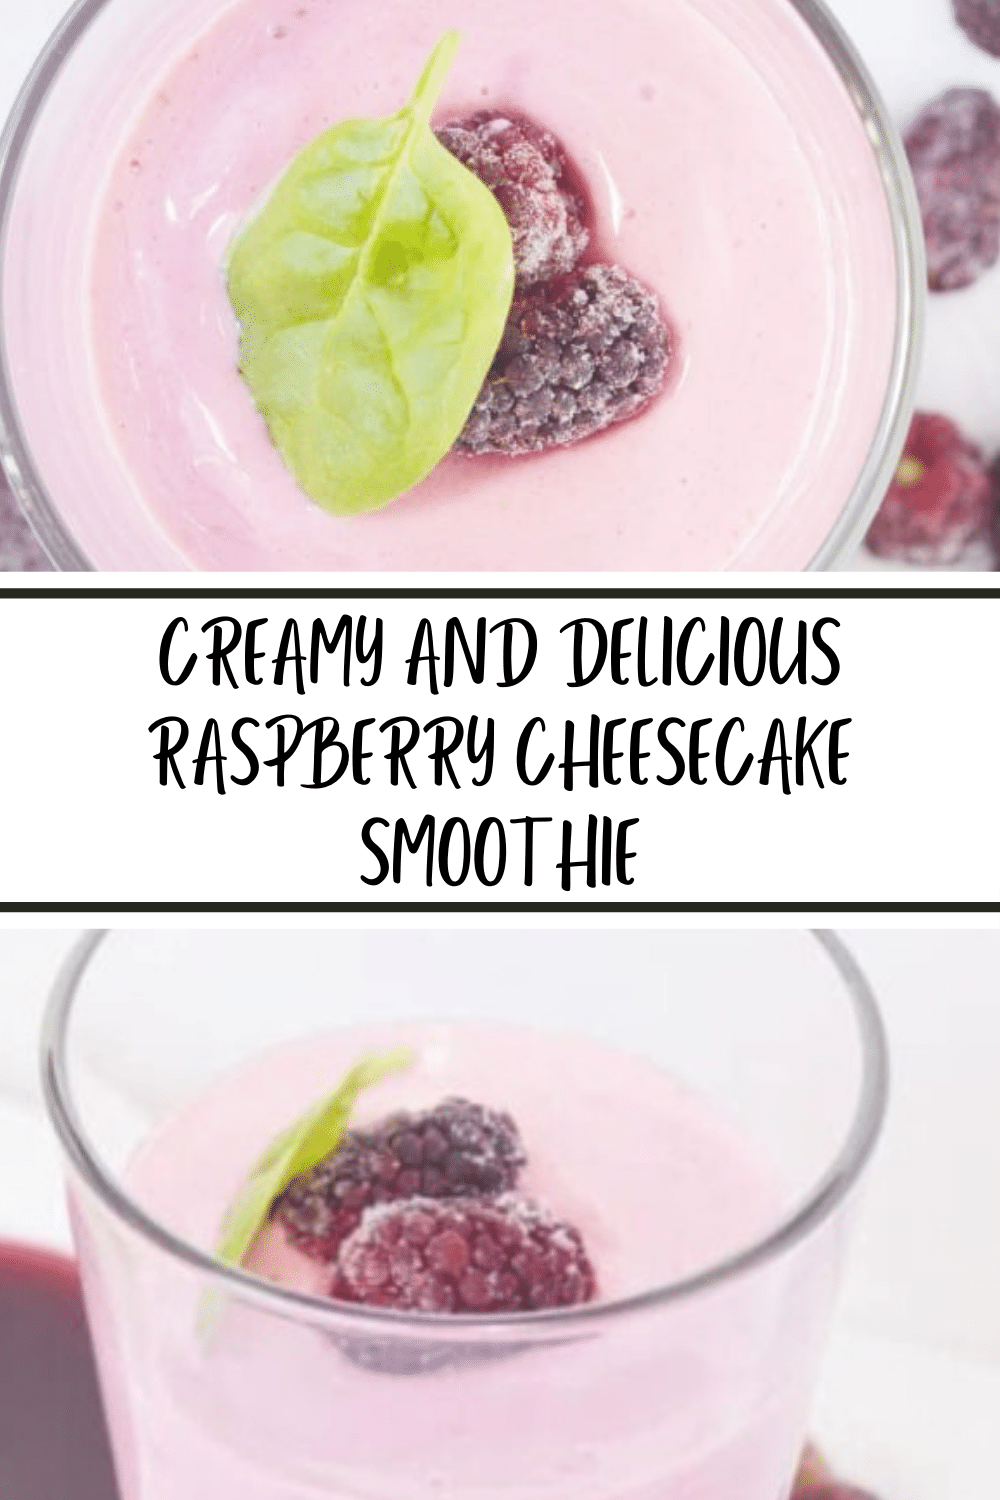 This raspberry cheesecake smoothie tastes like dessert but is loaded with vitamins, antioxidants and protein! #smoothies #raspberries #raspberrycheesecake #smoothierecipes via @wondermomwannab